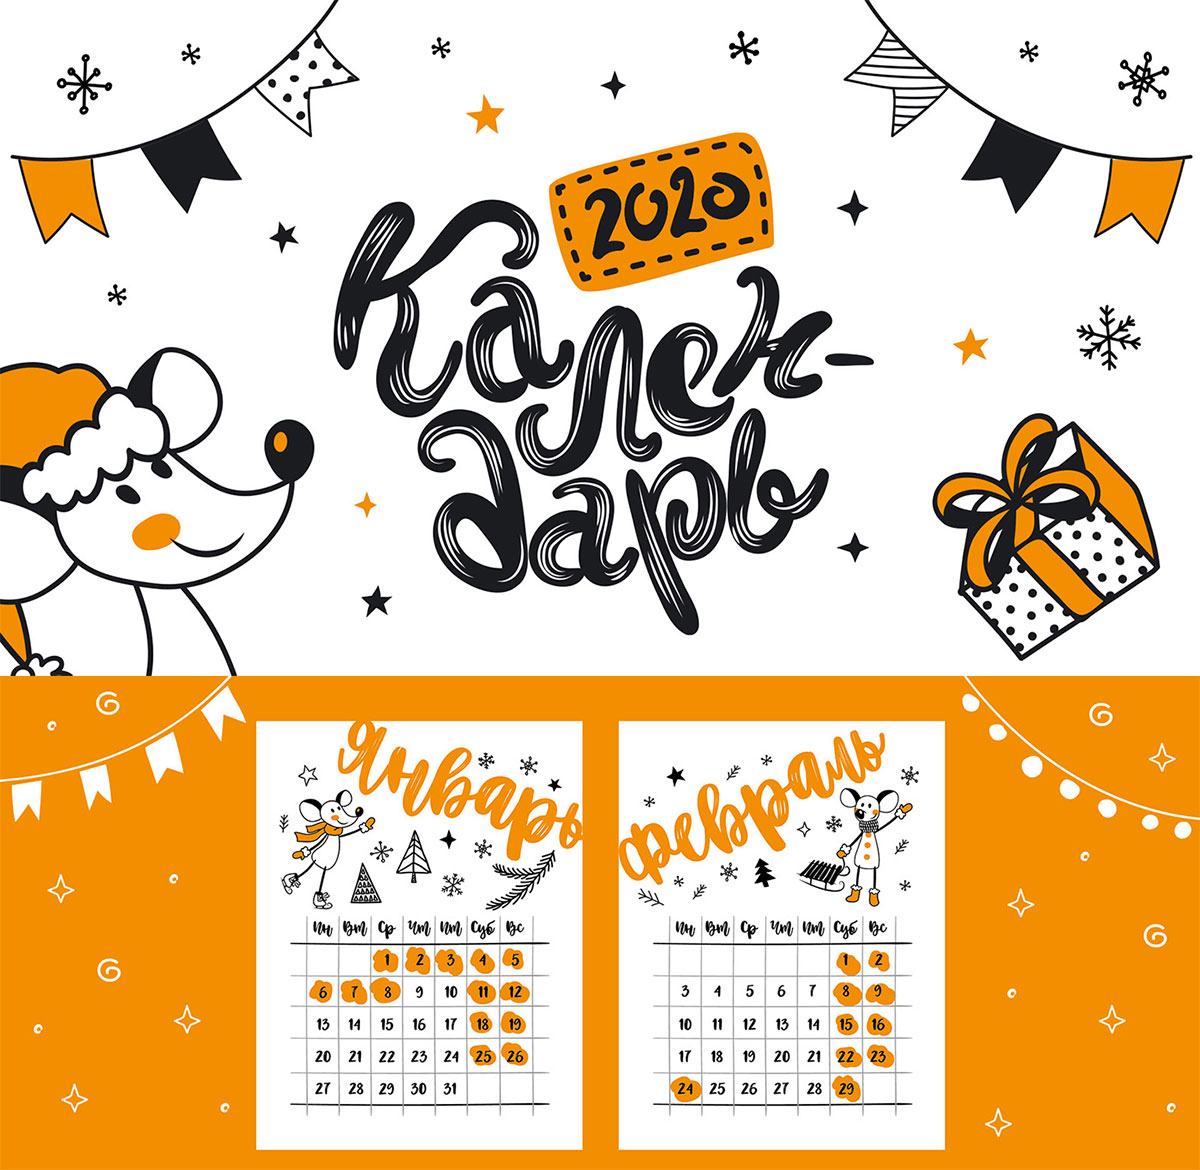 25 Best New Year 2020 Wall &amp; Desk Calendar Designs For